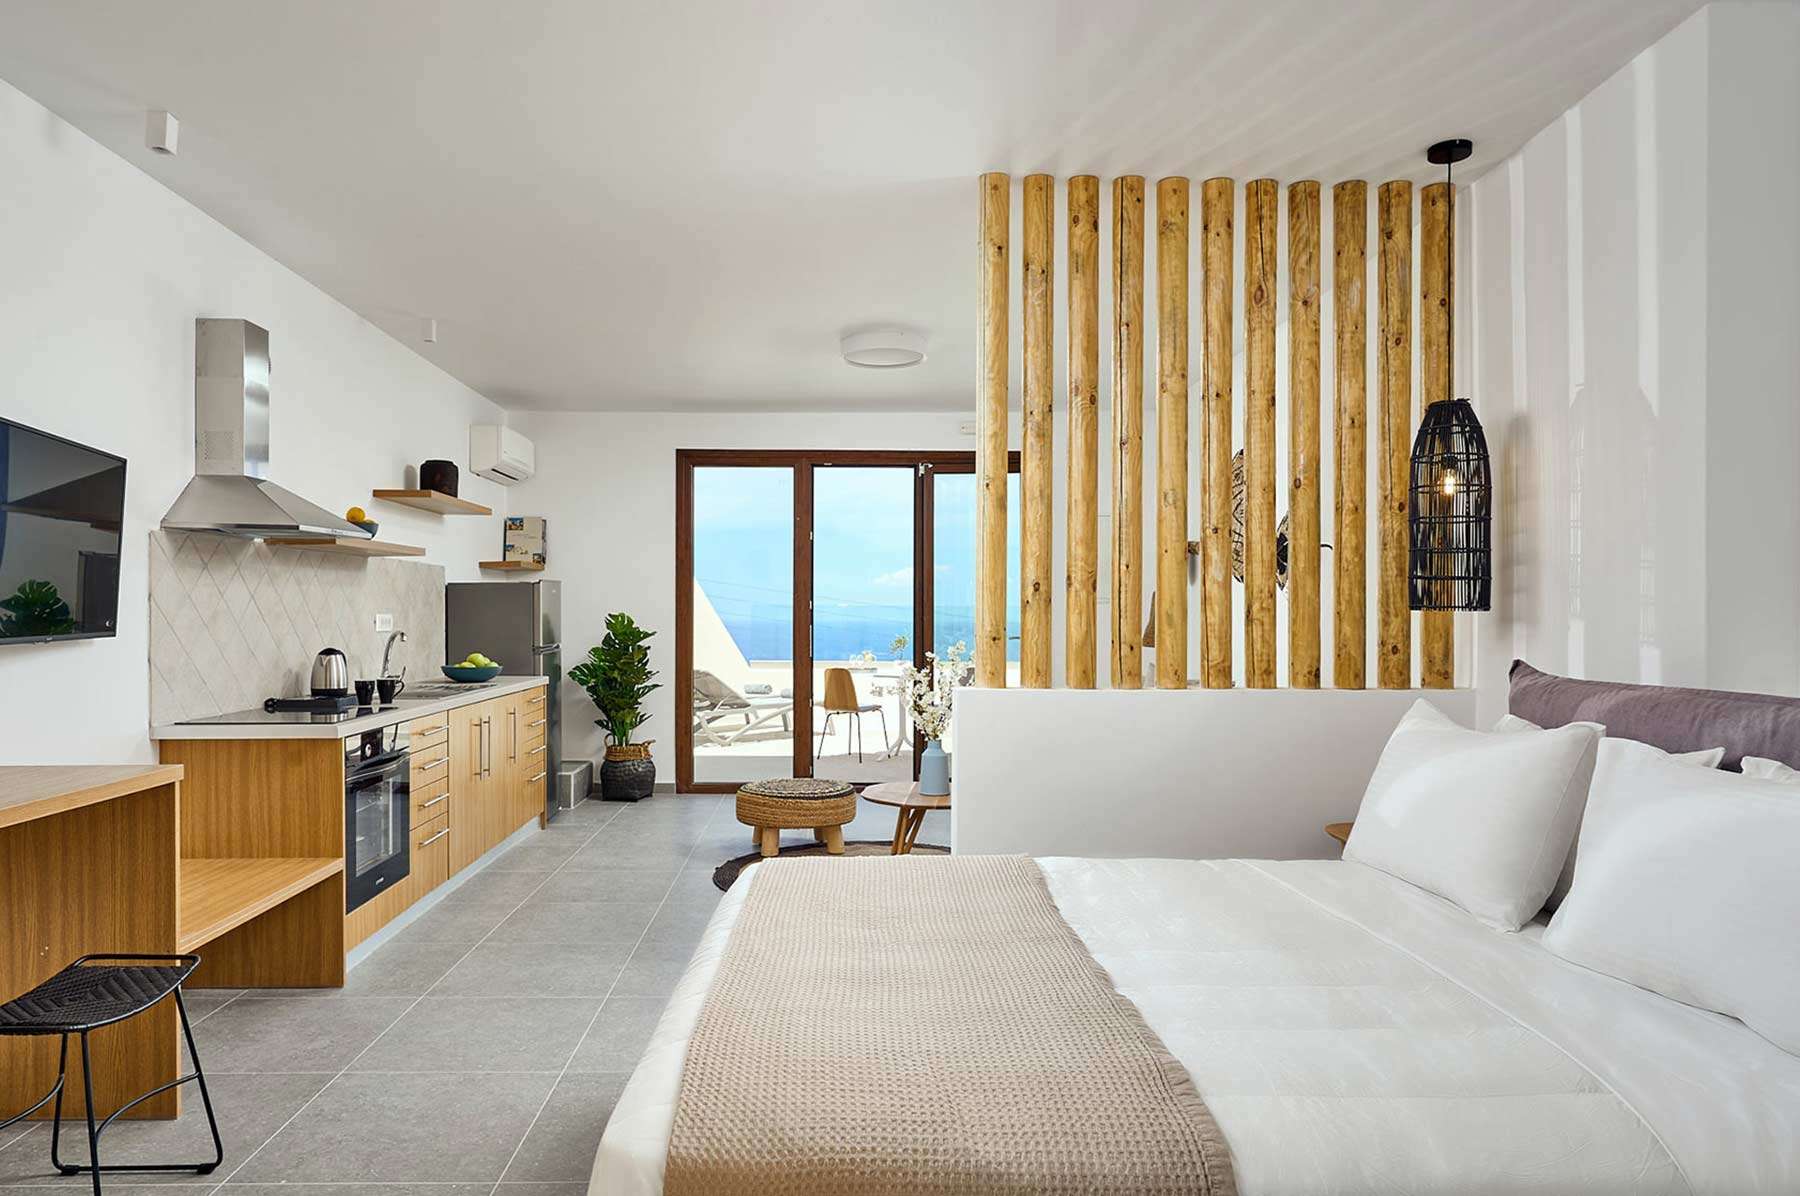 Casa di Namphio Villa & Suites - Anafi, Cyclades, Greece